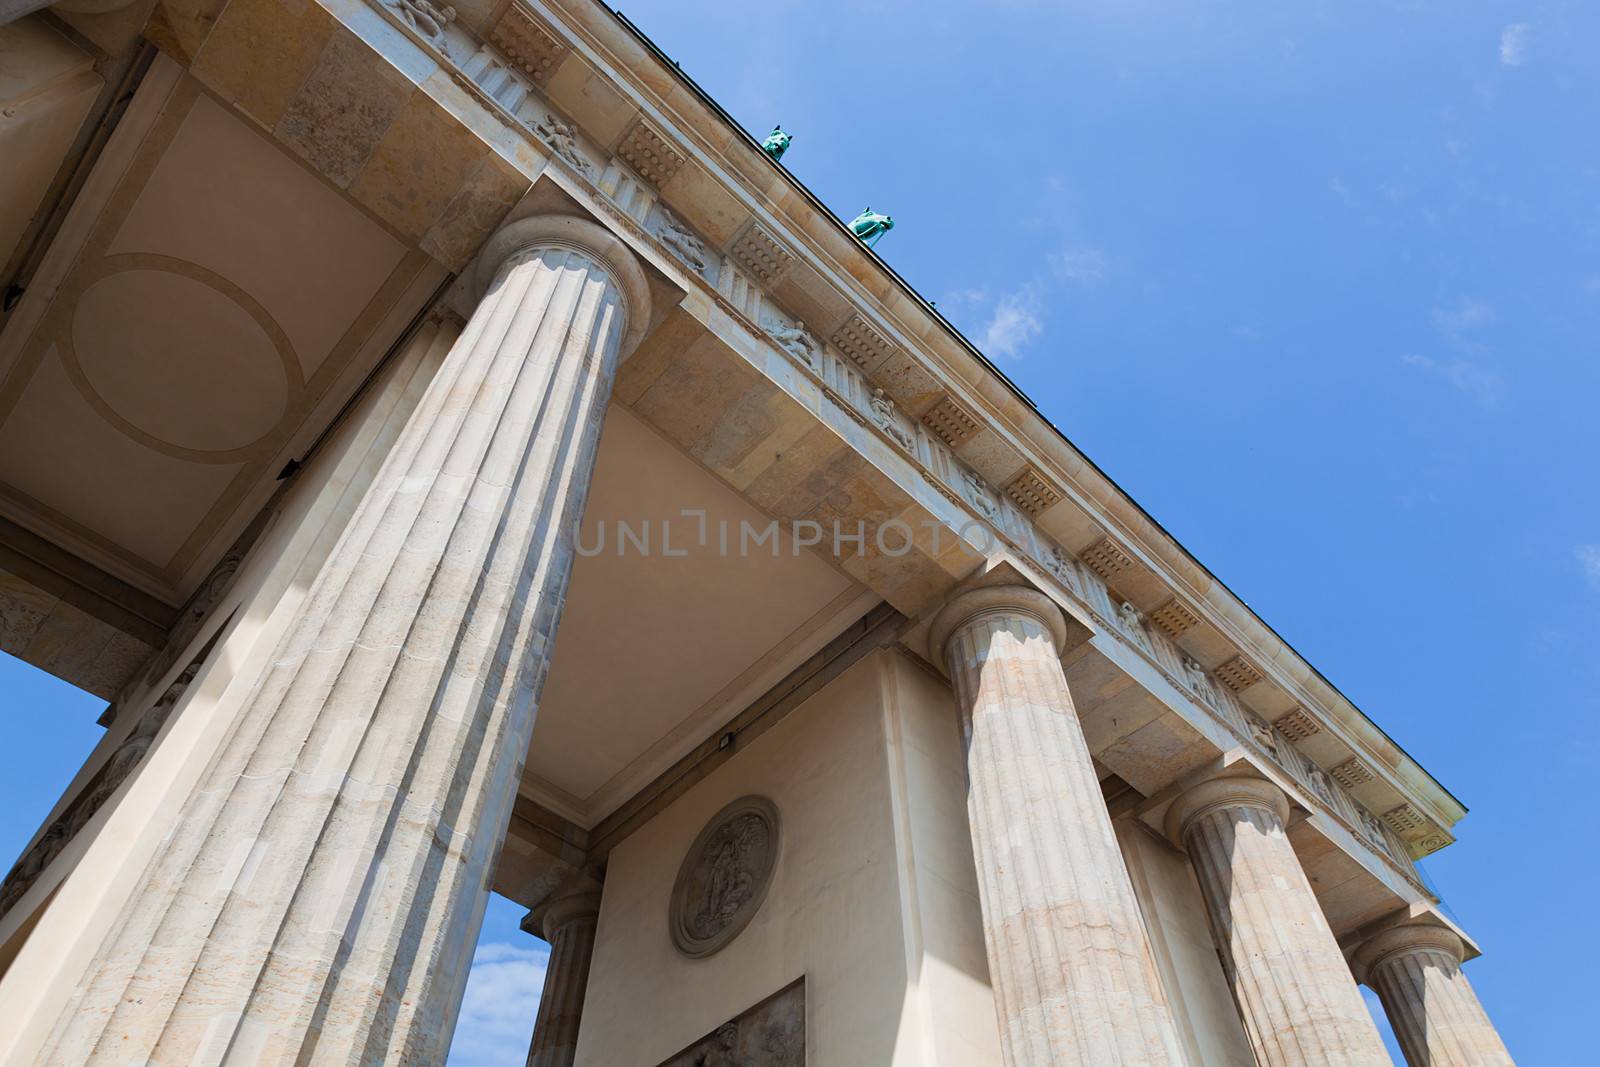 Brandenburg Gate, Berlin, Germany by photocreo